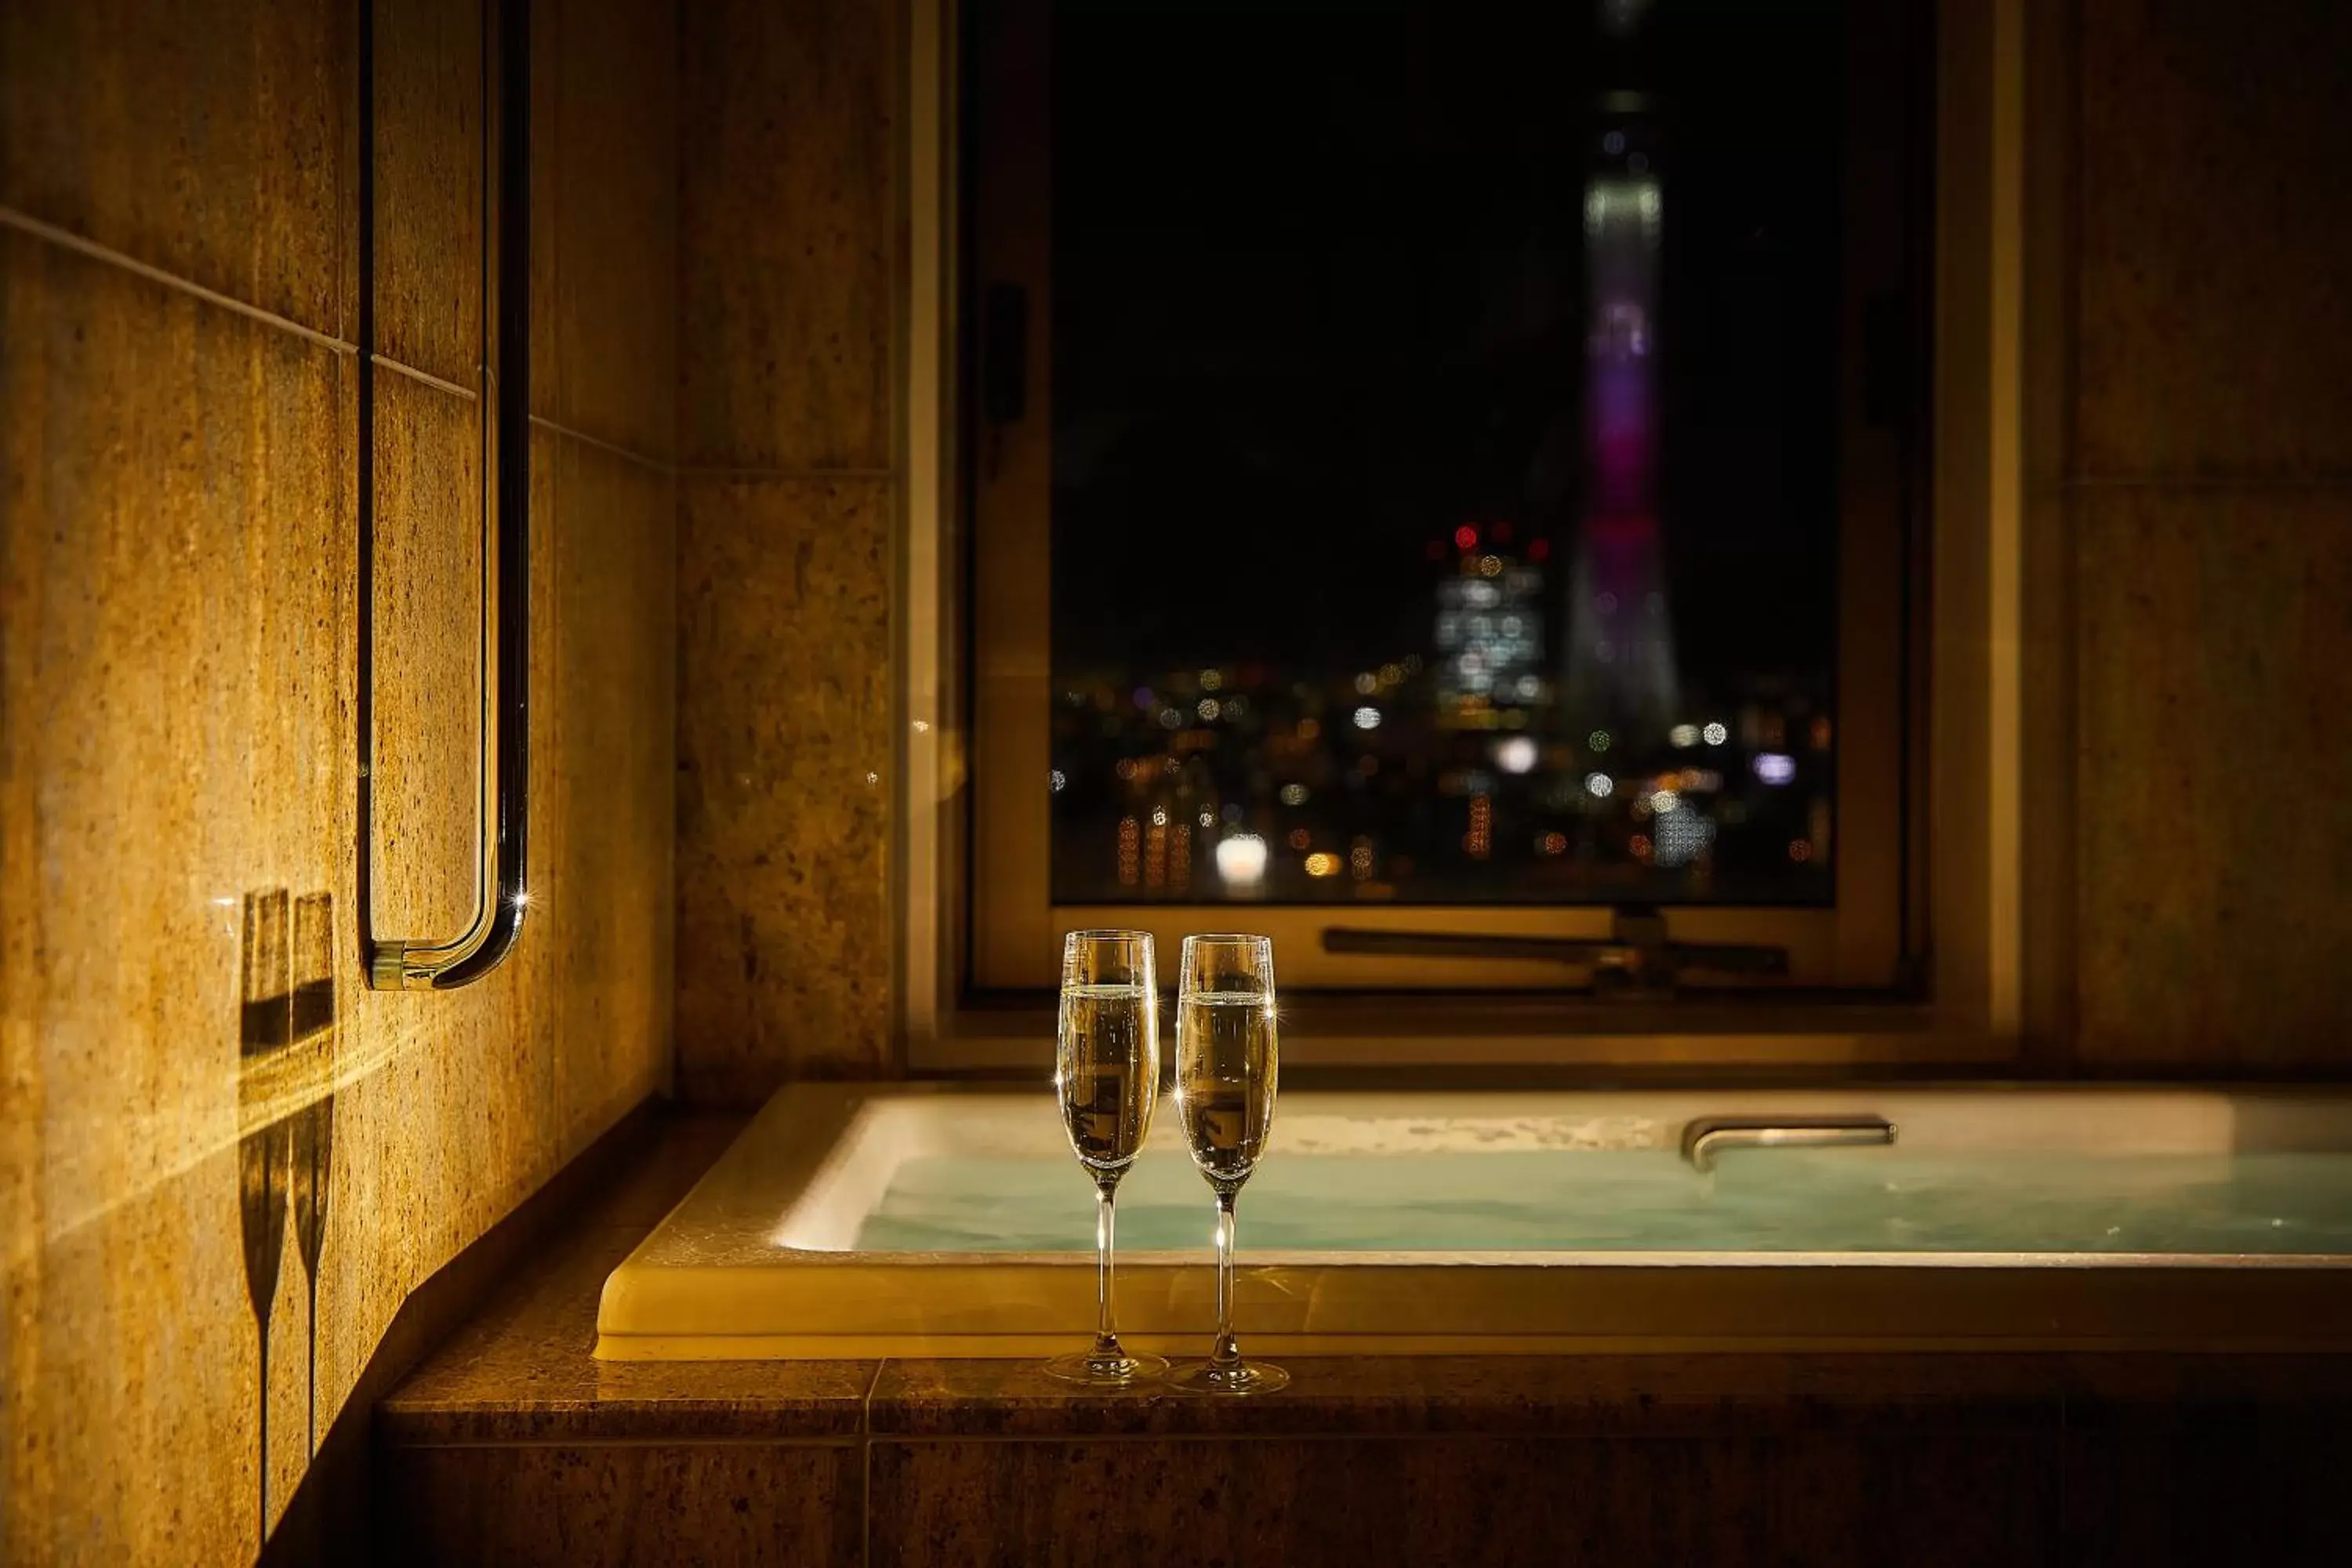 Bathroom in Asakusa View Hotel